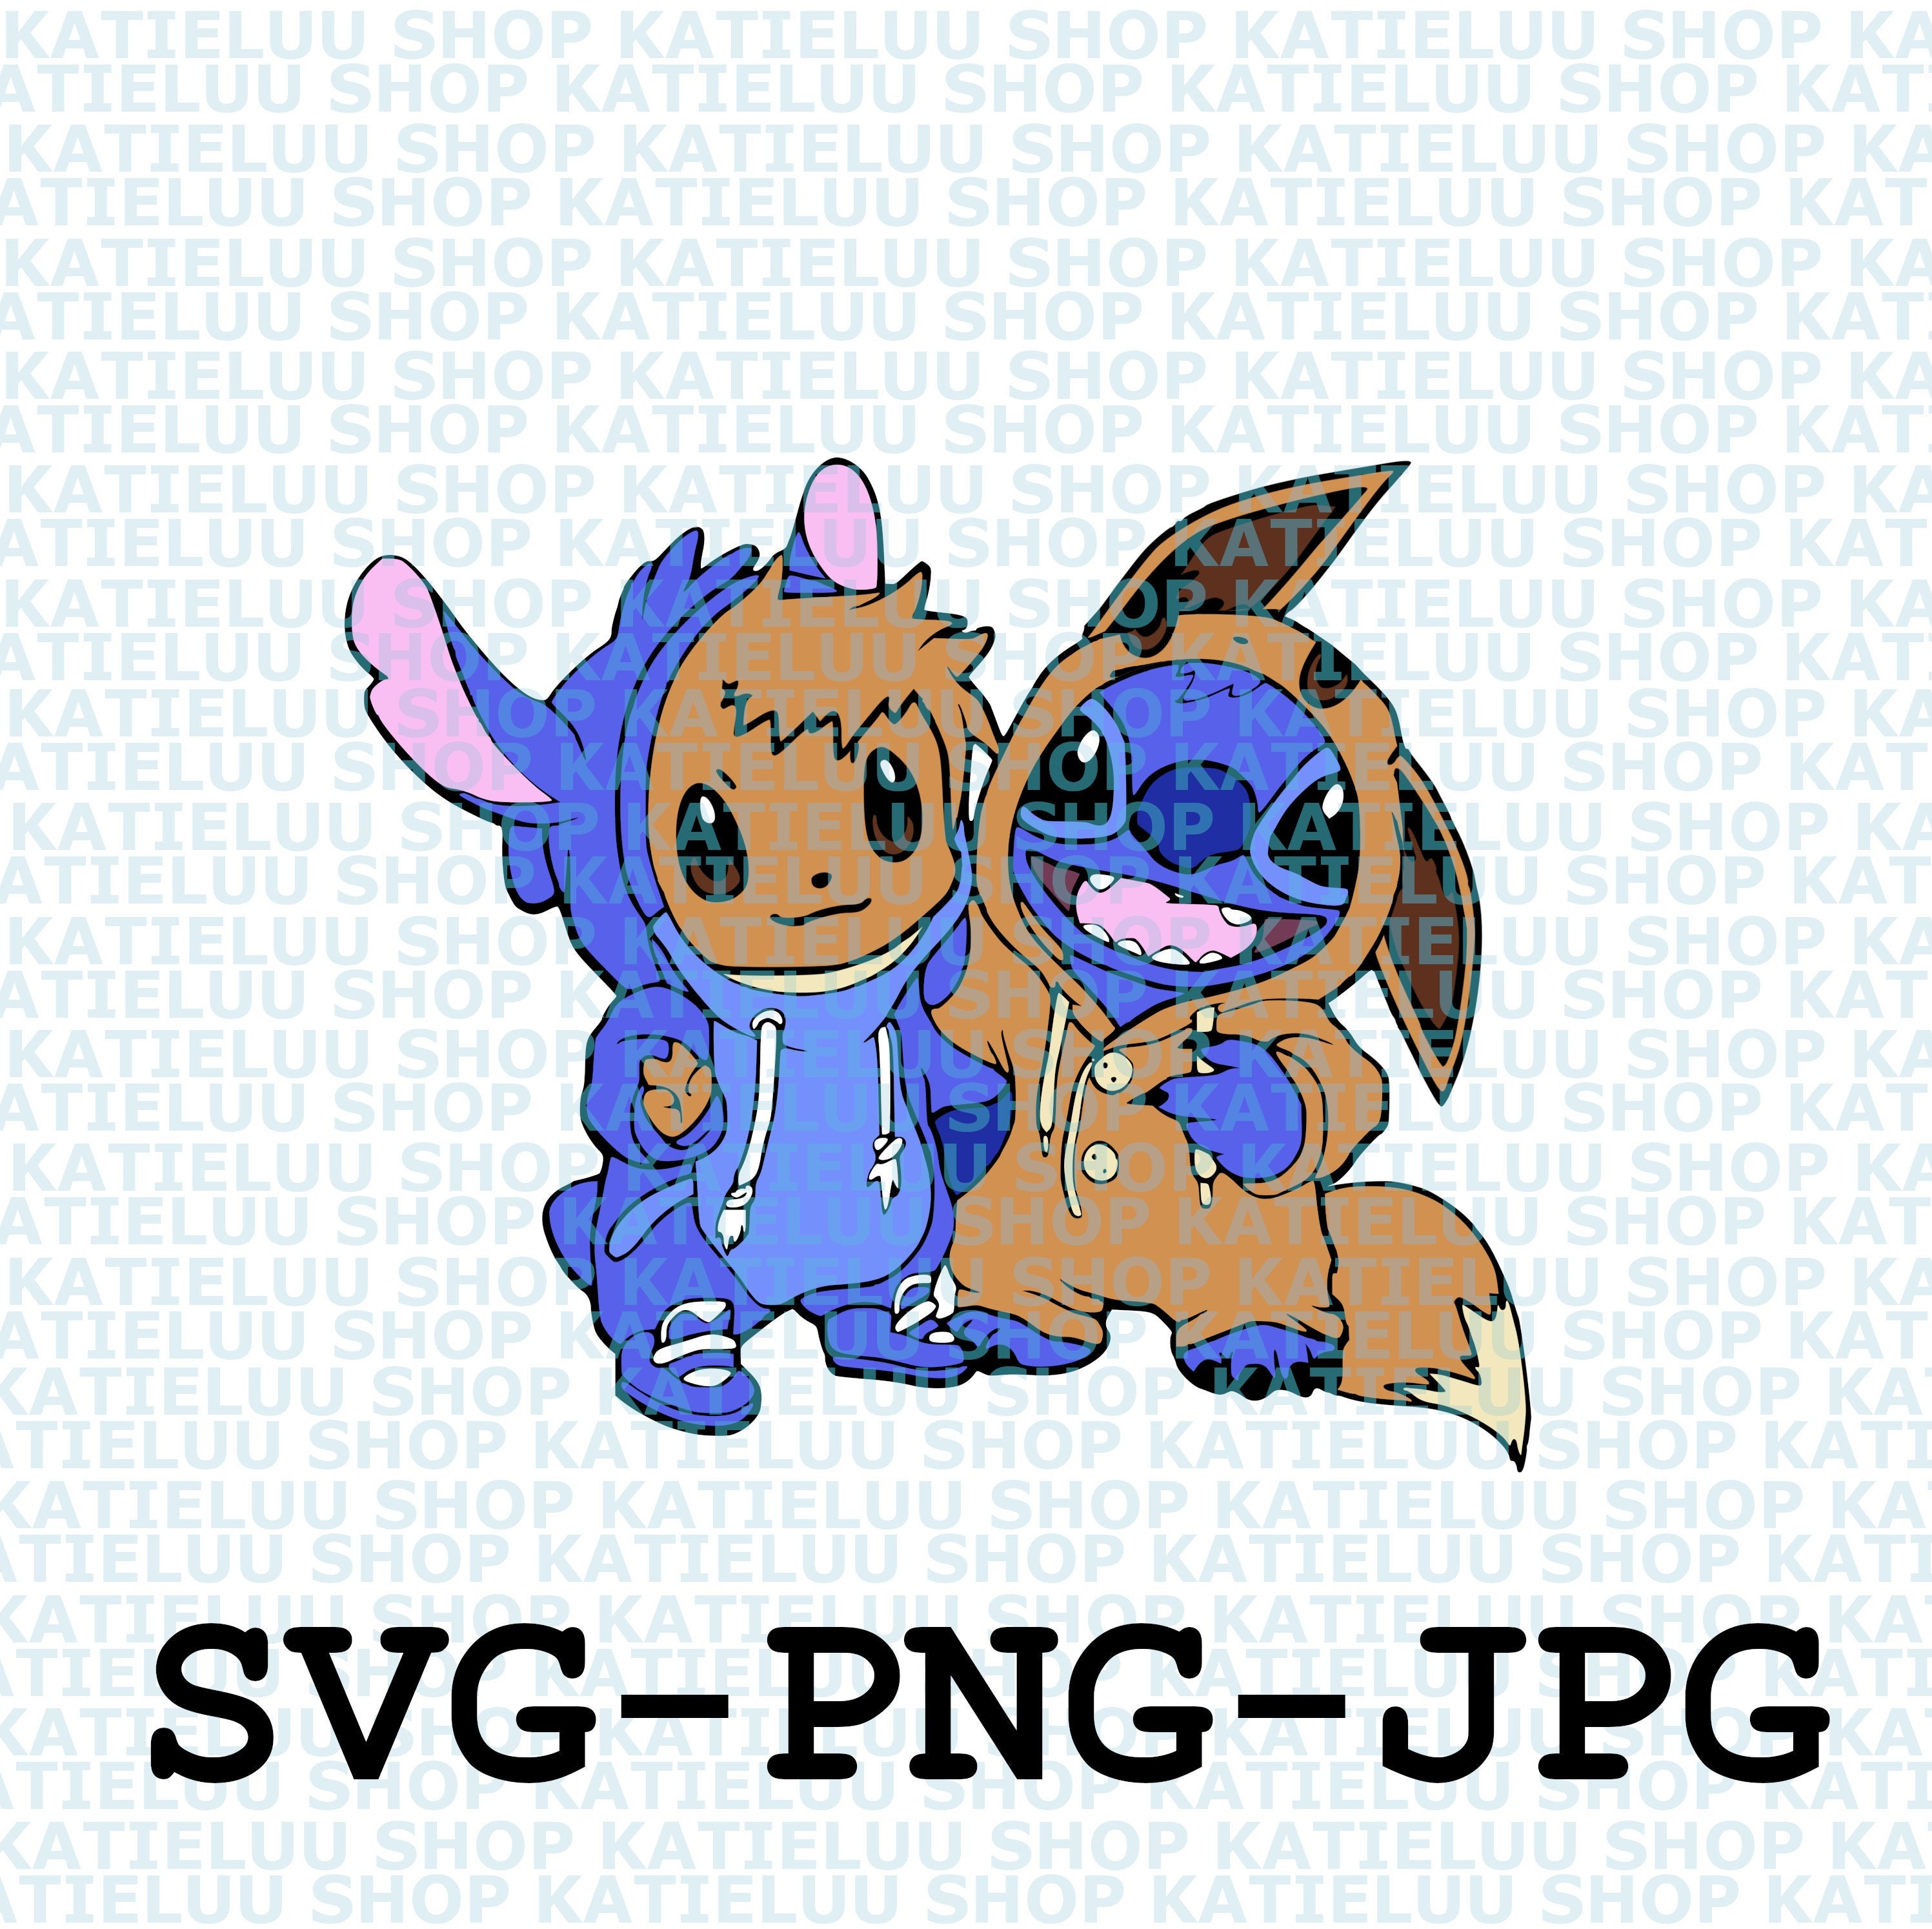 Stitch And Pikachu LV Png, Louis Vuitton Logo Png, Stitch And Pikachu Png,  Fashion Brand Png, Ai Digital File